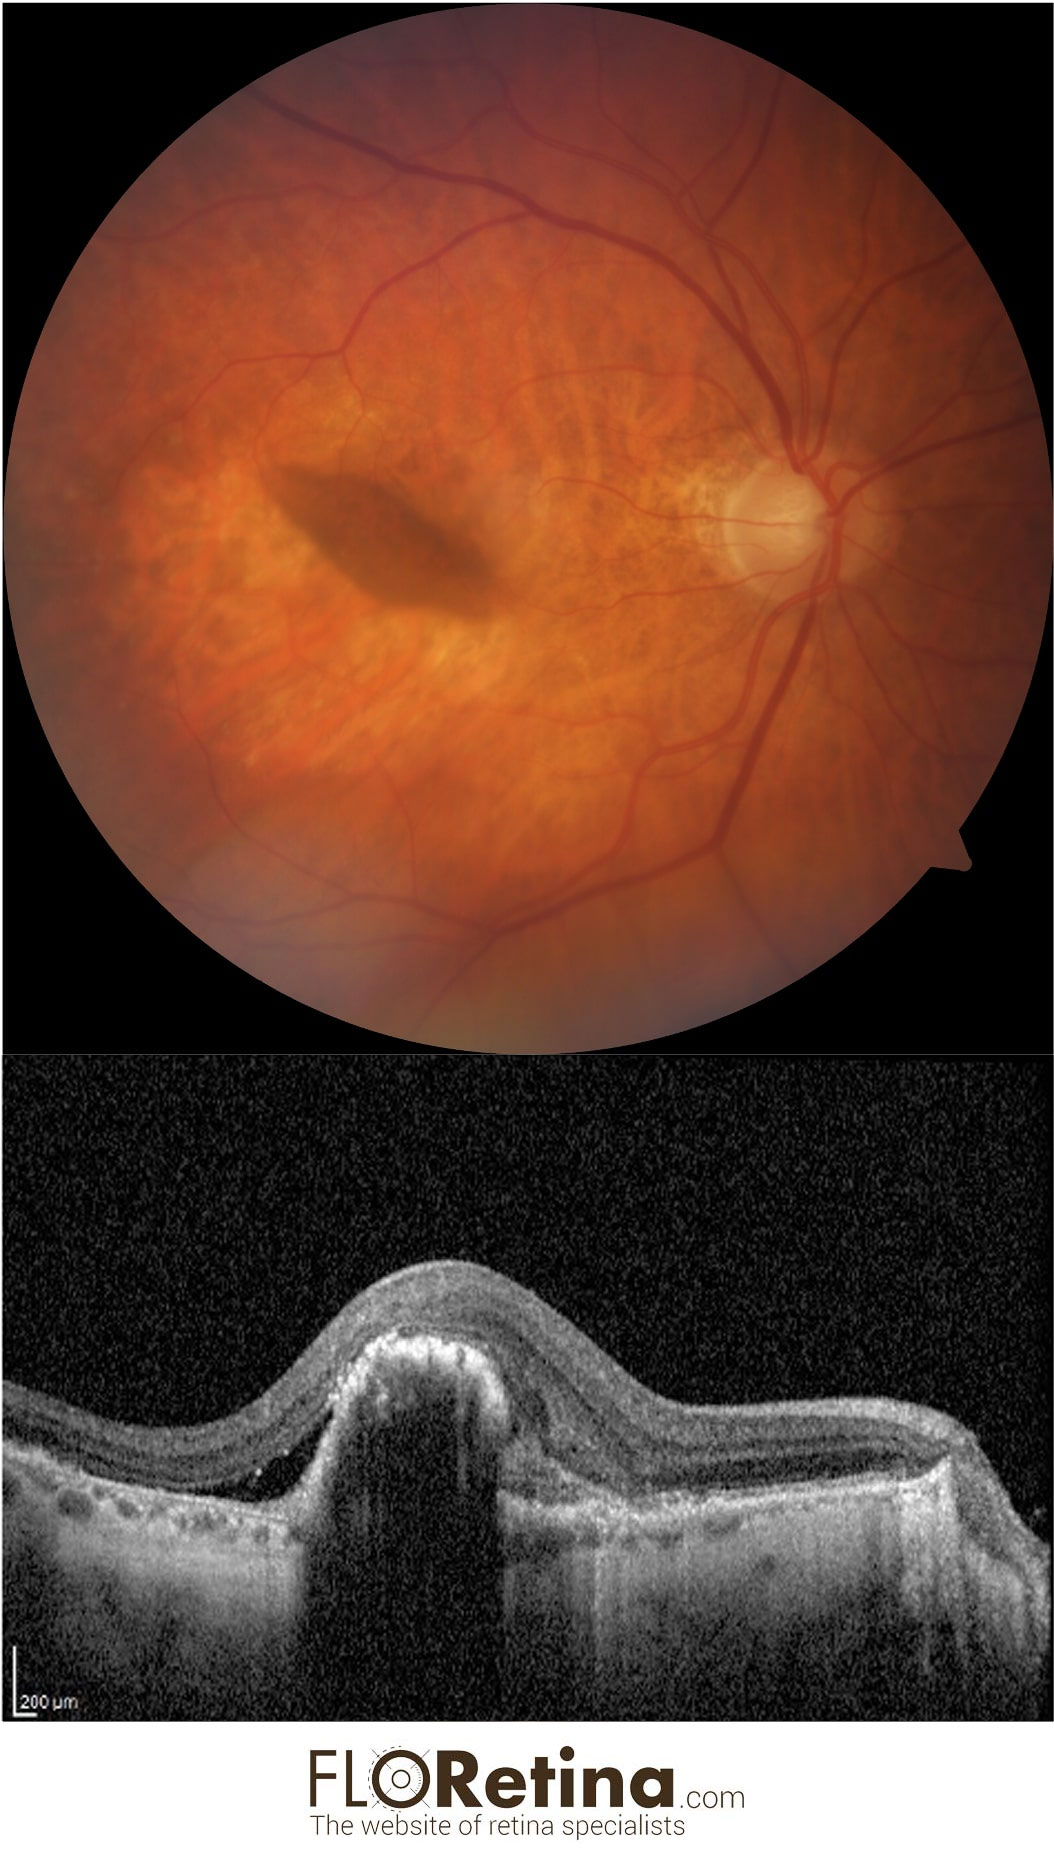 RPE (retinal pigment epithelium) tear